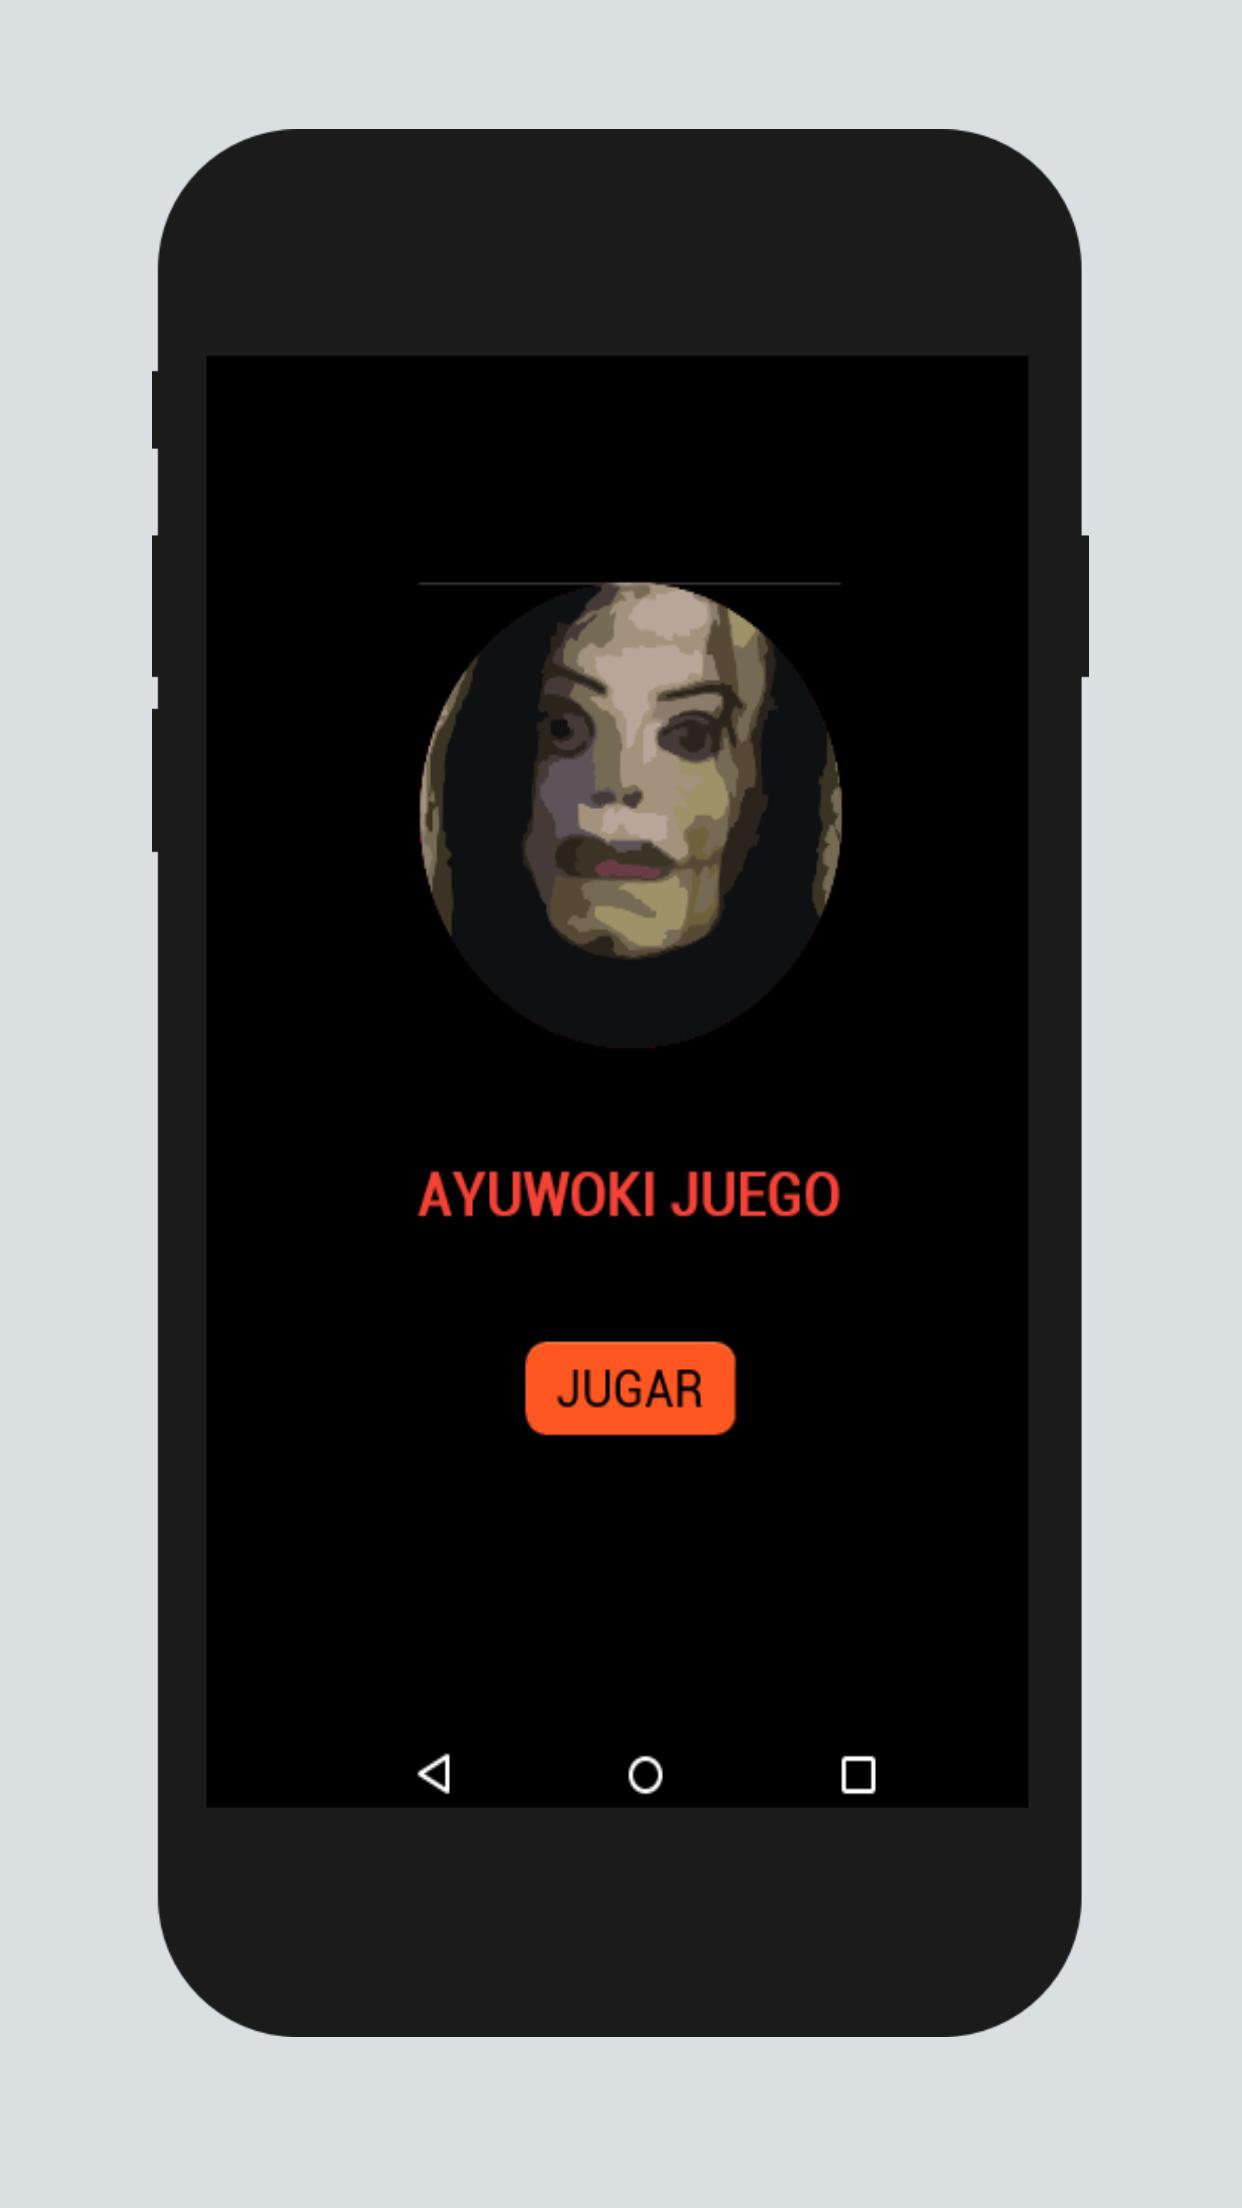 Jordan Peele Us for Android - APK Download